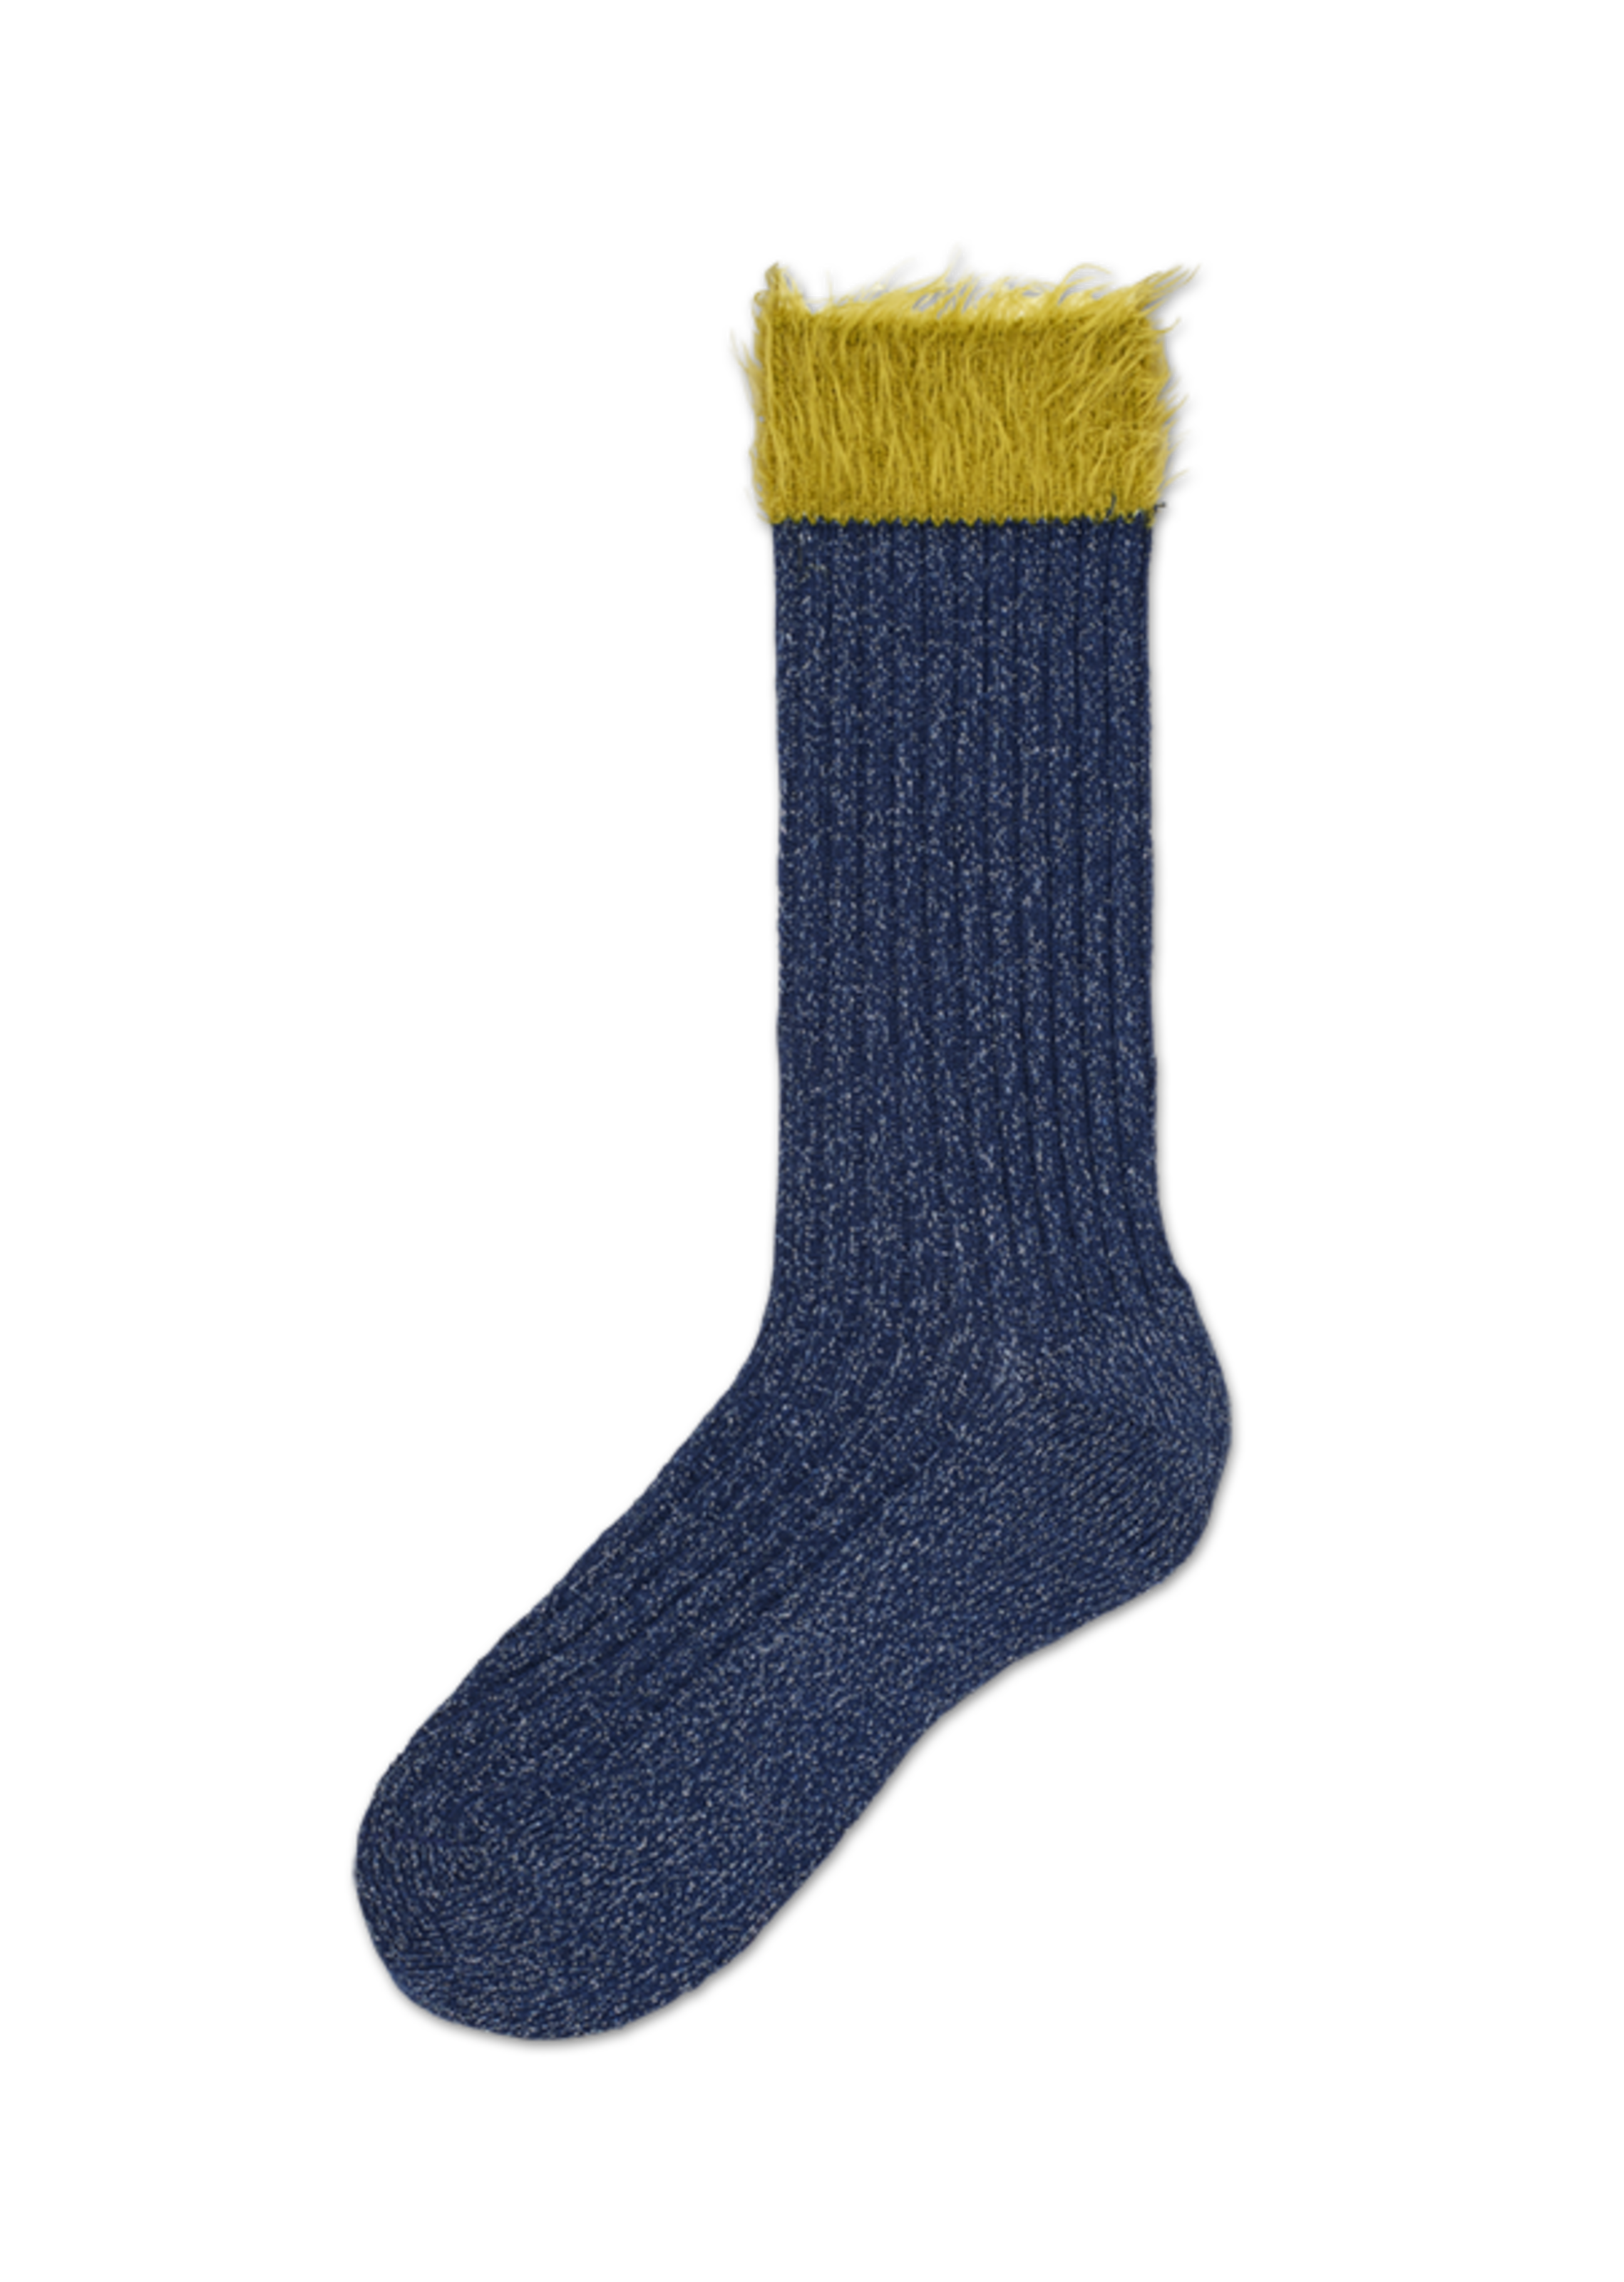 Dunkelblaue mittelhohe Socken: Judit | Hysteria by Happy Socks product